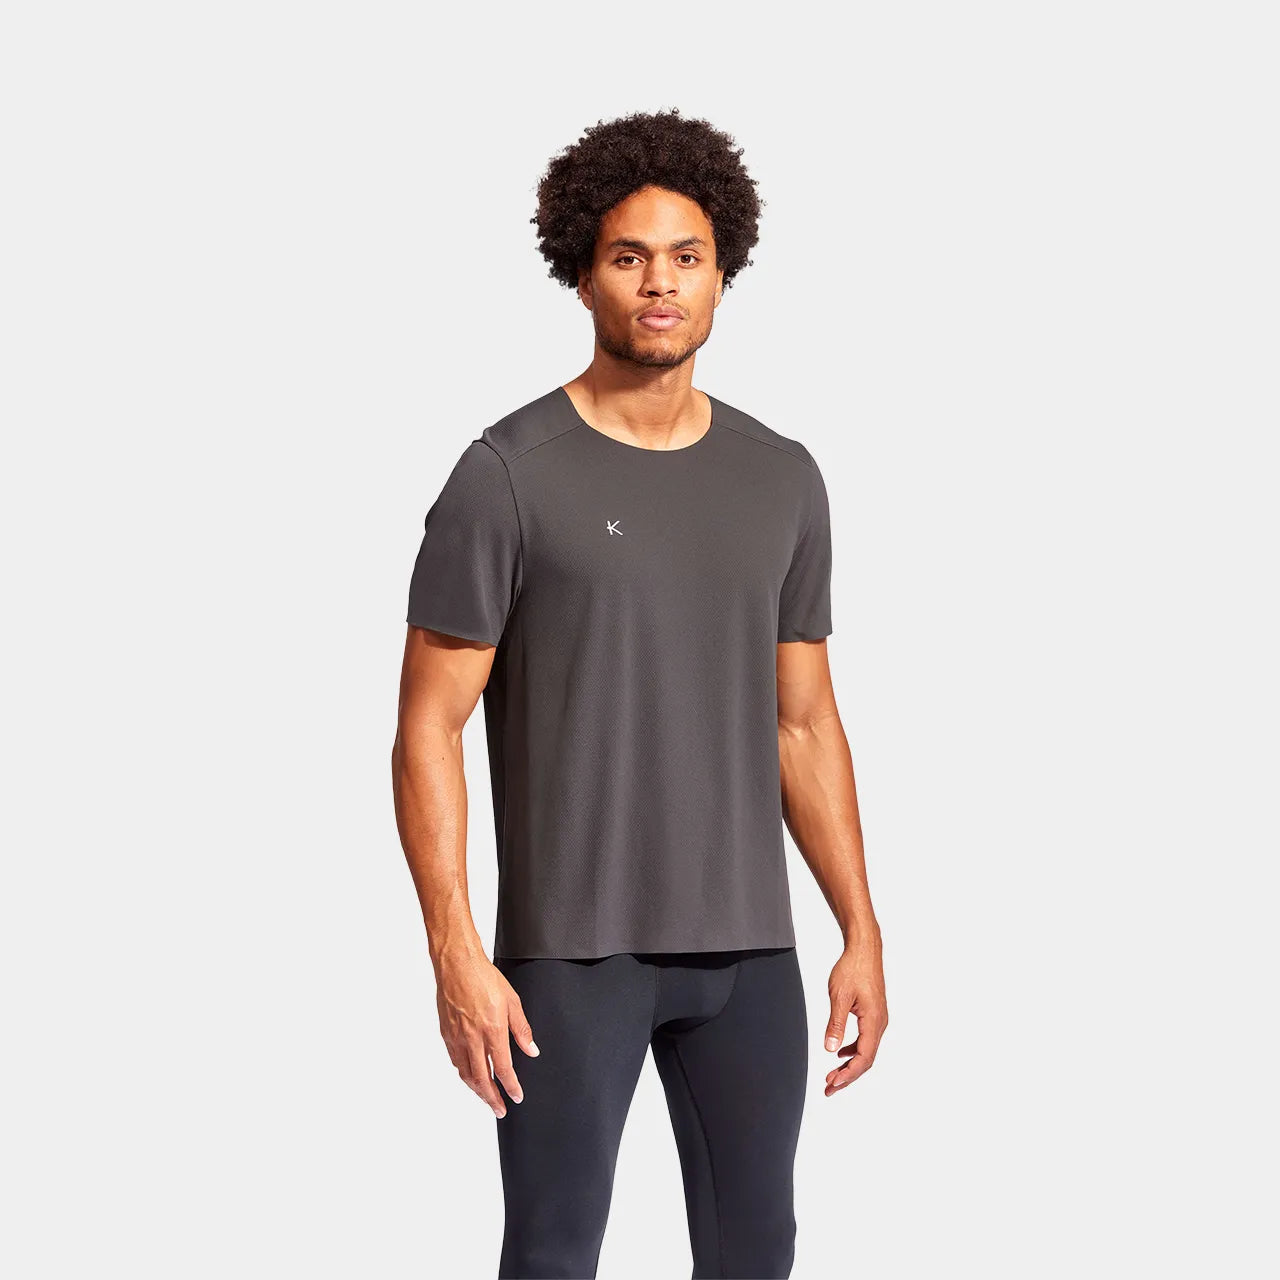 KYMIRA CHARGE Infrared Men's Performance T-Shirt - Grey